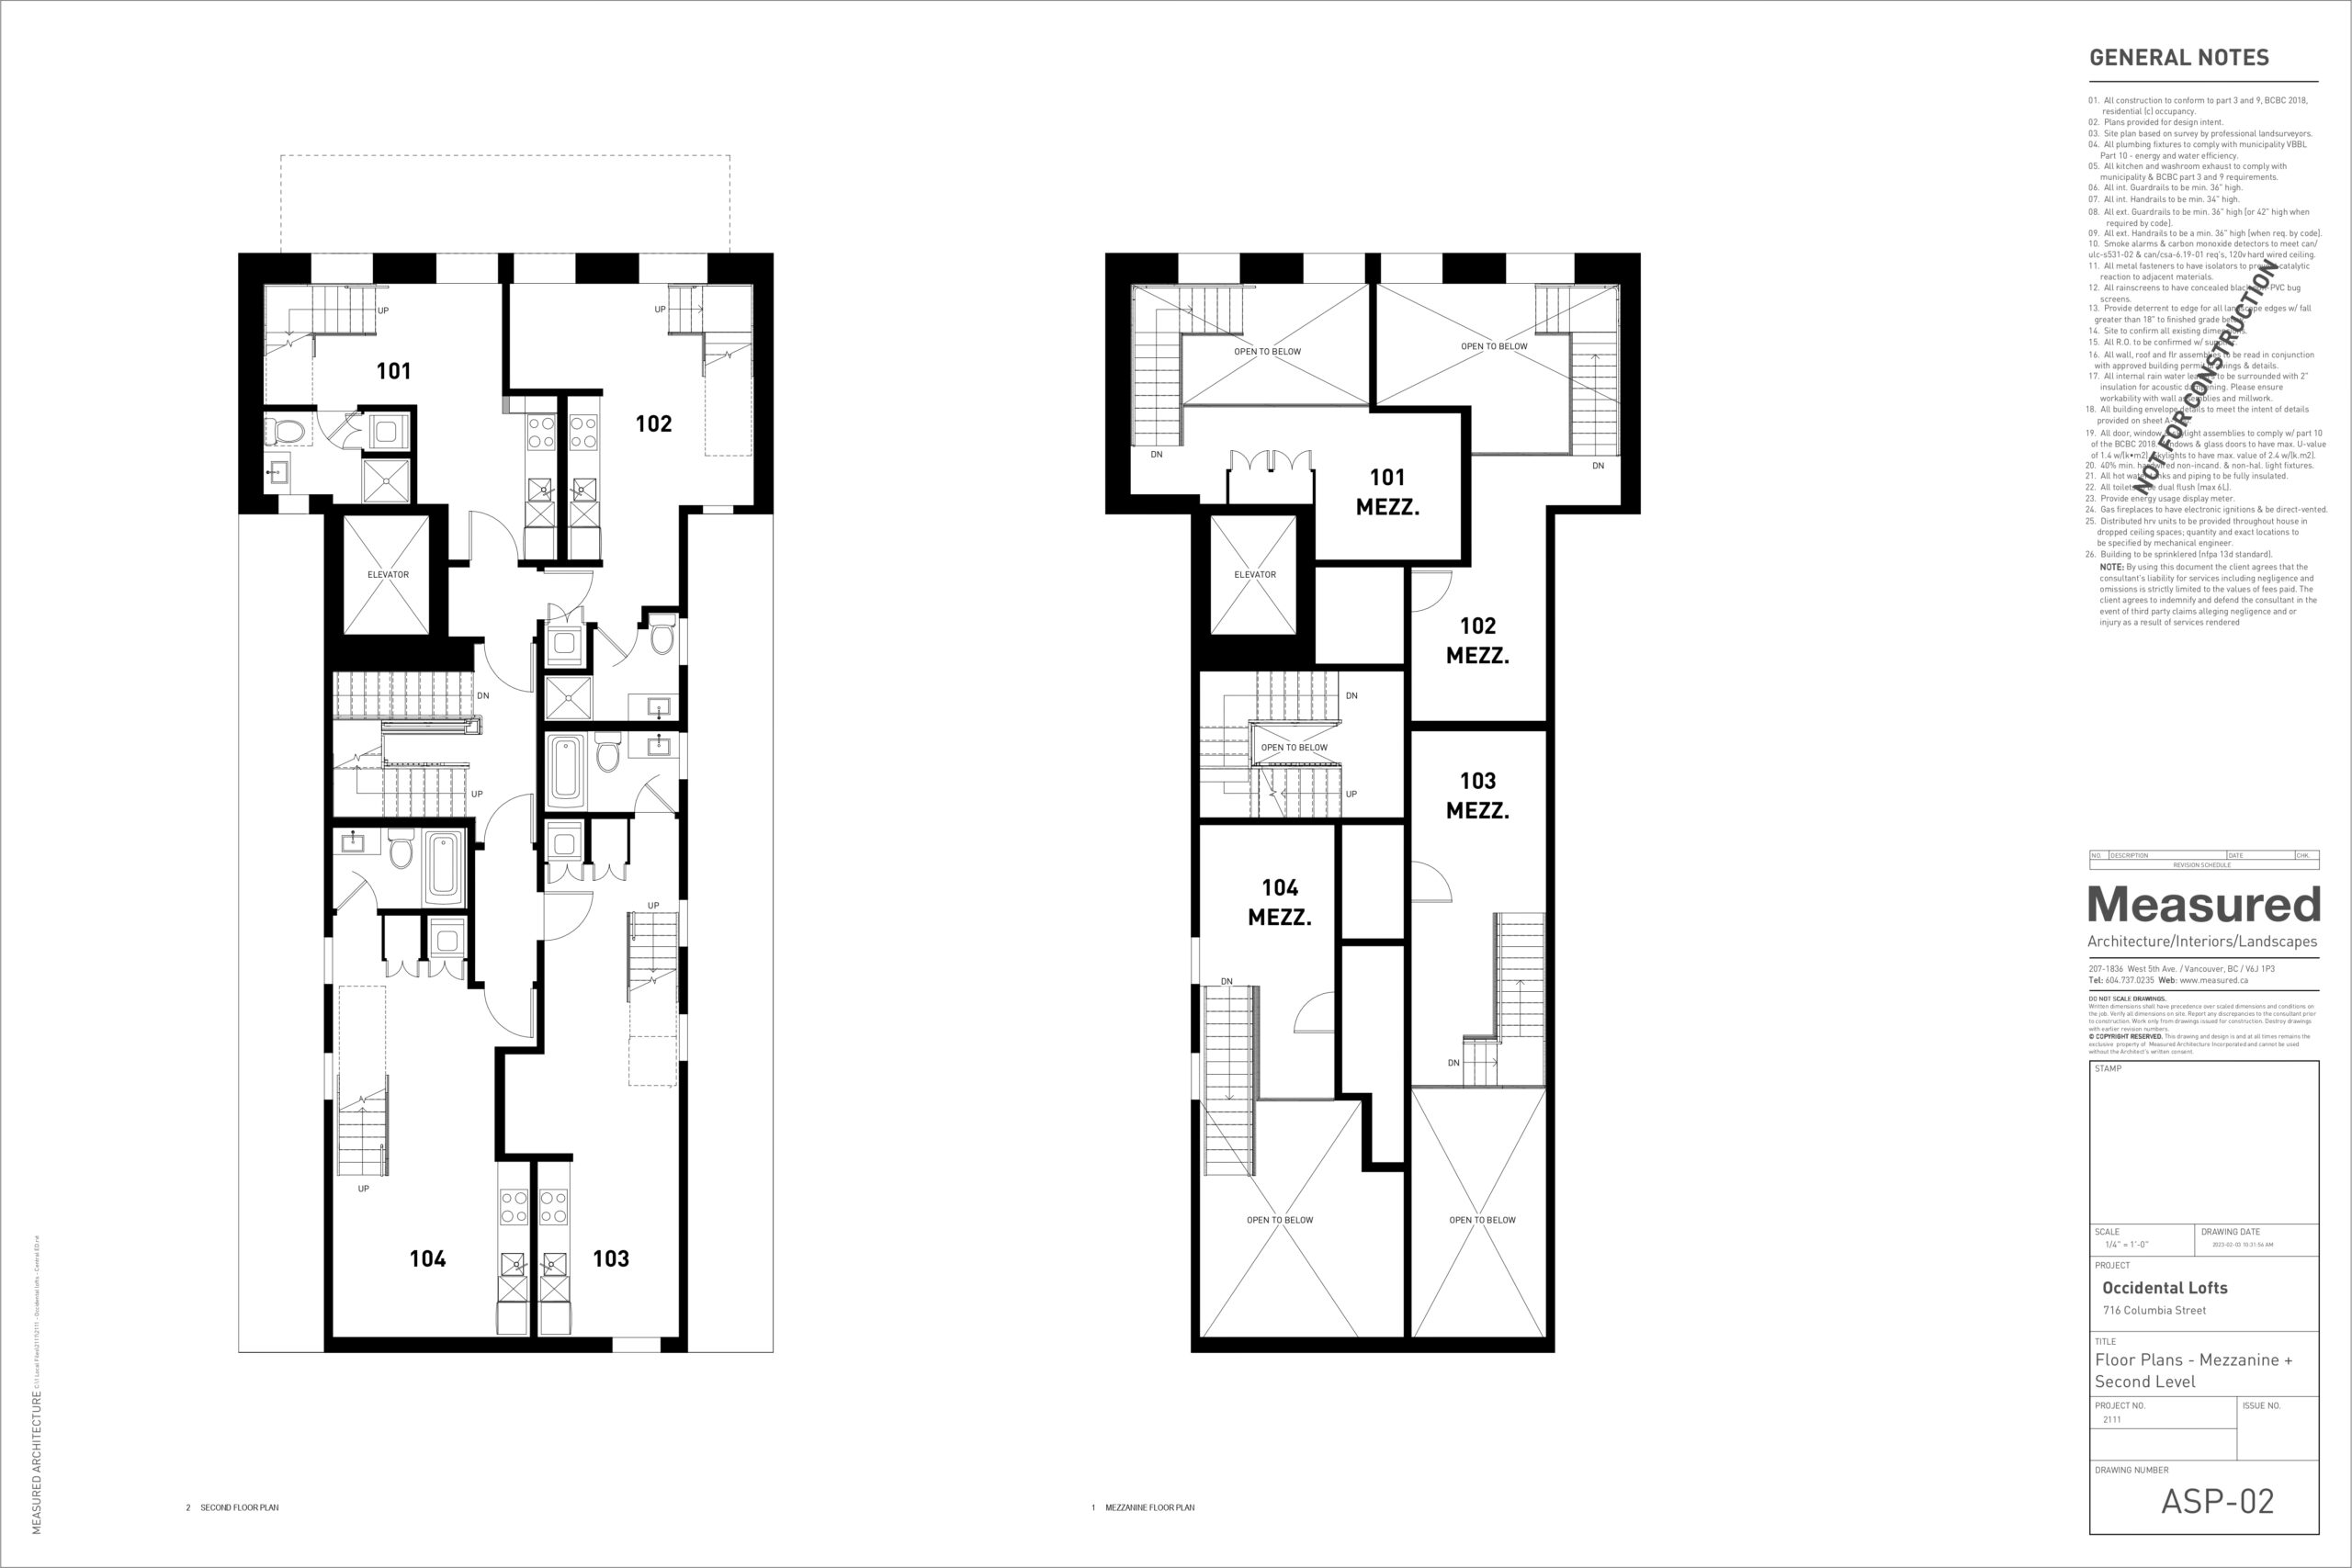 ASP-02 - Floor Plans - Mezzanine + Second Level_pages-to-jpg-0001